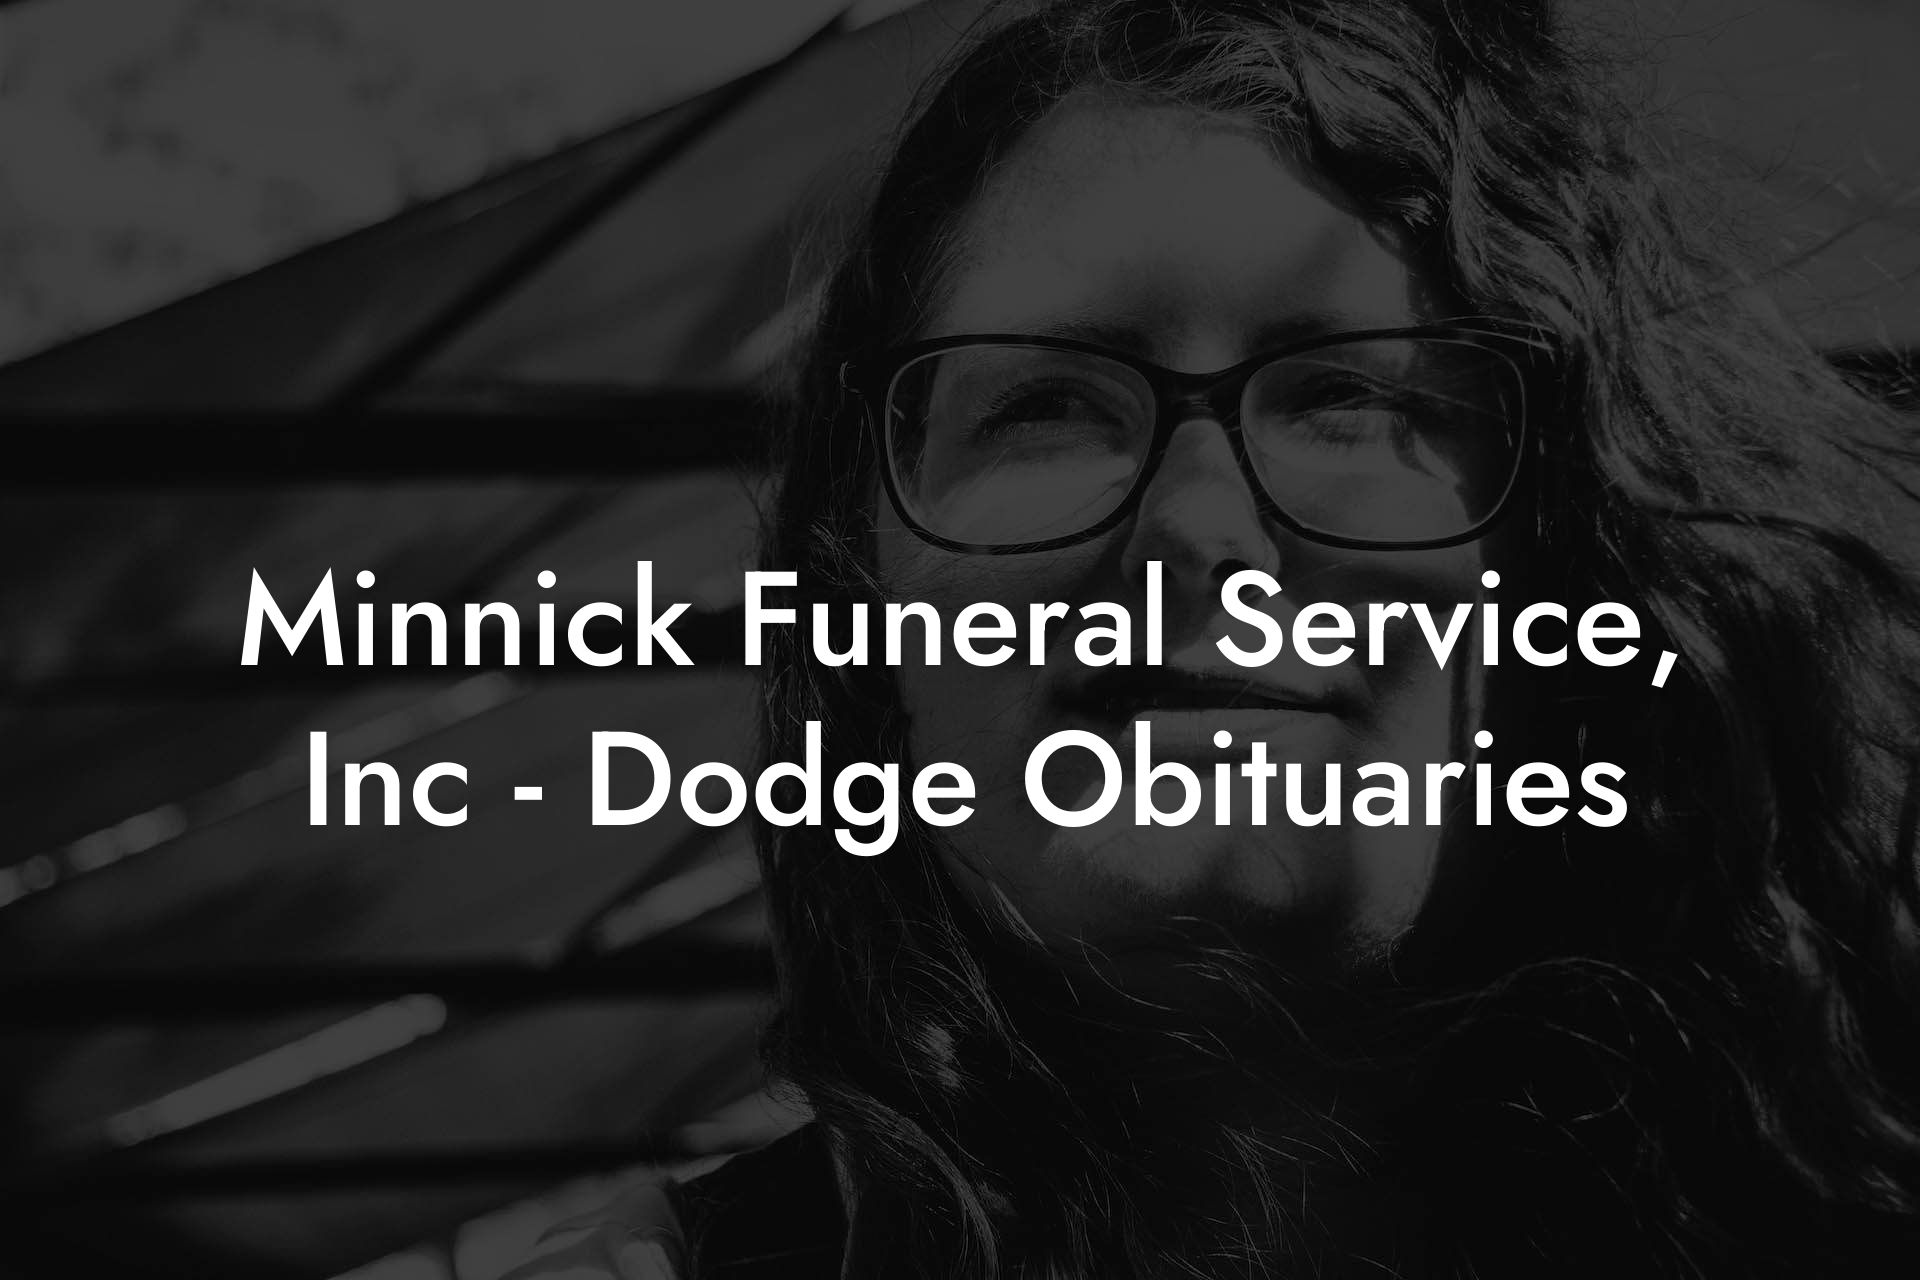 Minnick Funeral Service, Inc - Dodge Obituaries